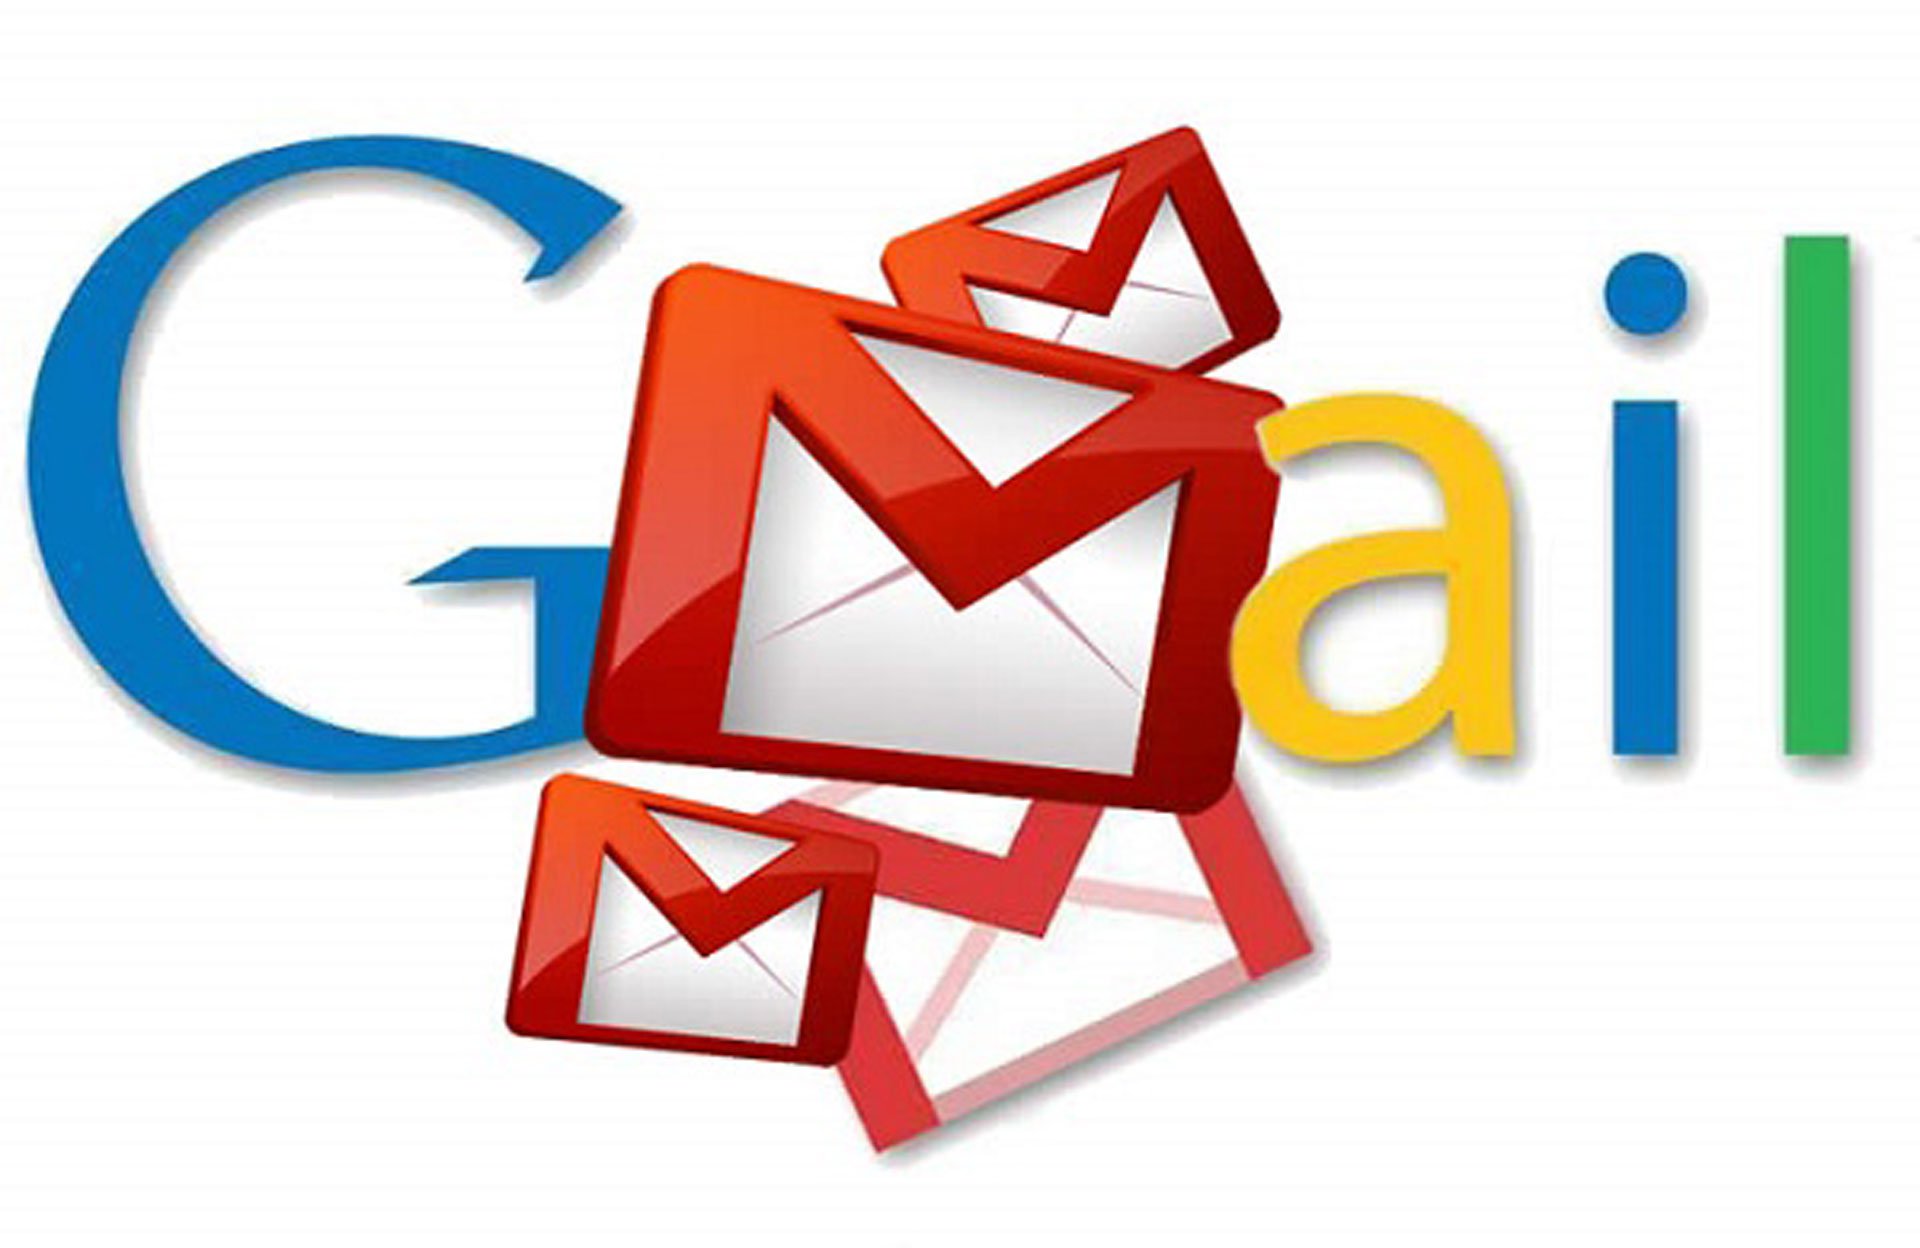 L gmail com. Gmail картинка. Gmail логотип. Wagtail.